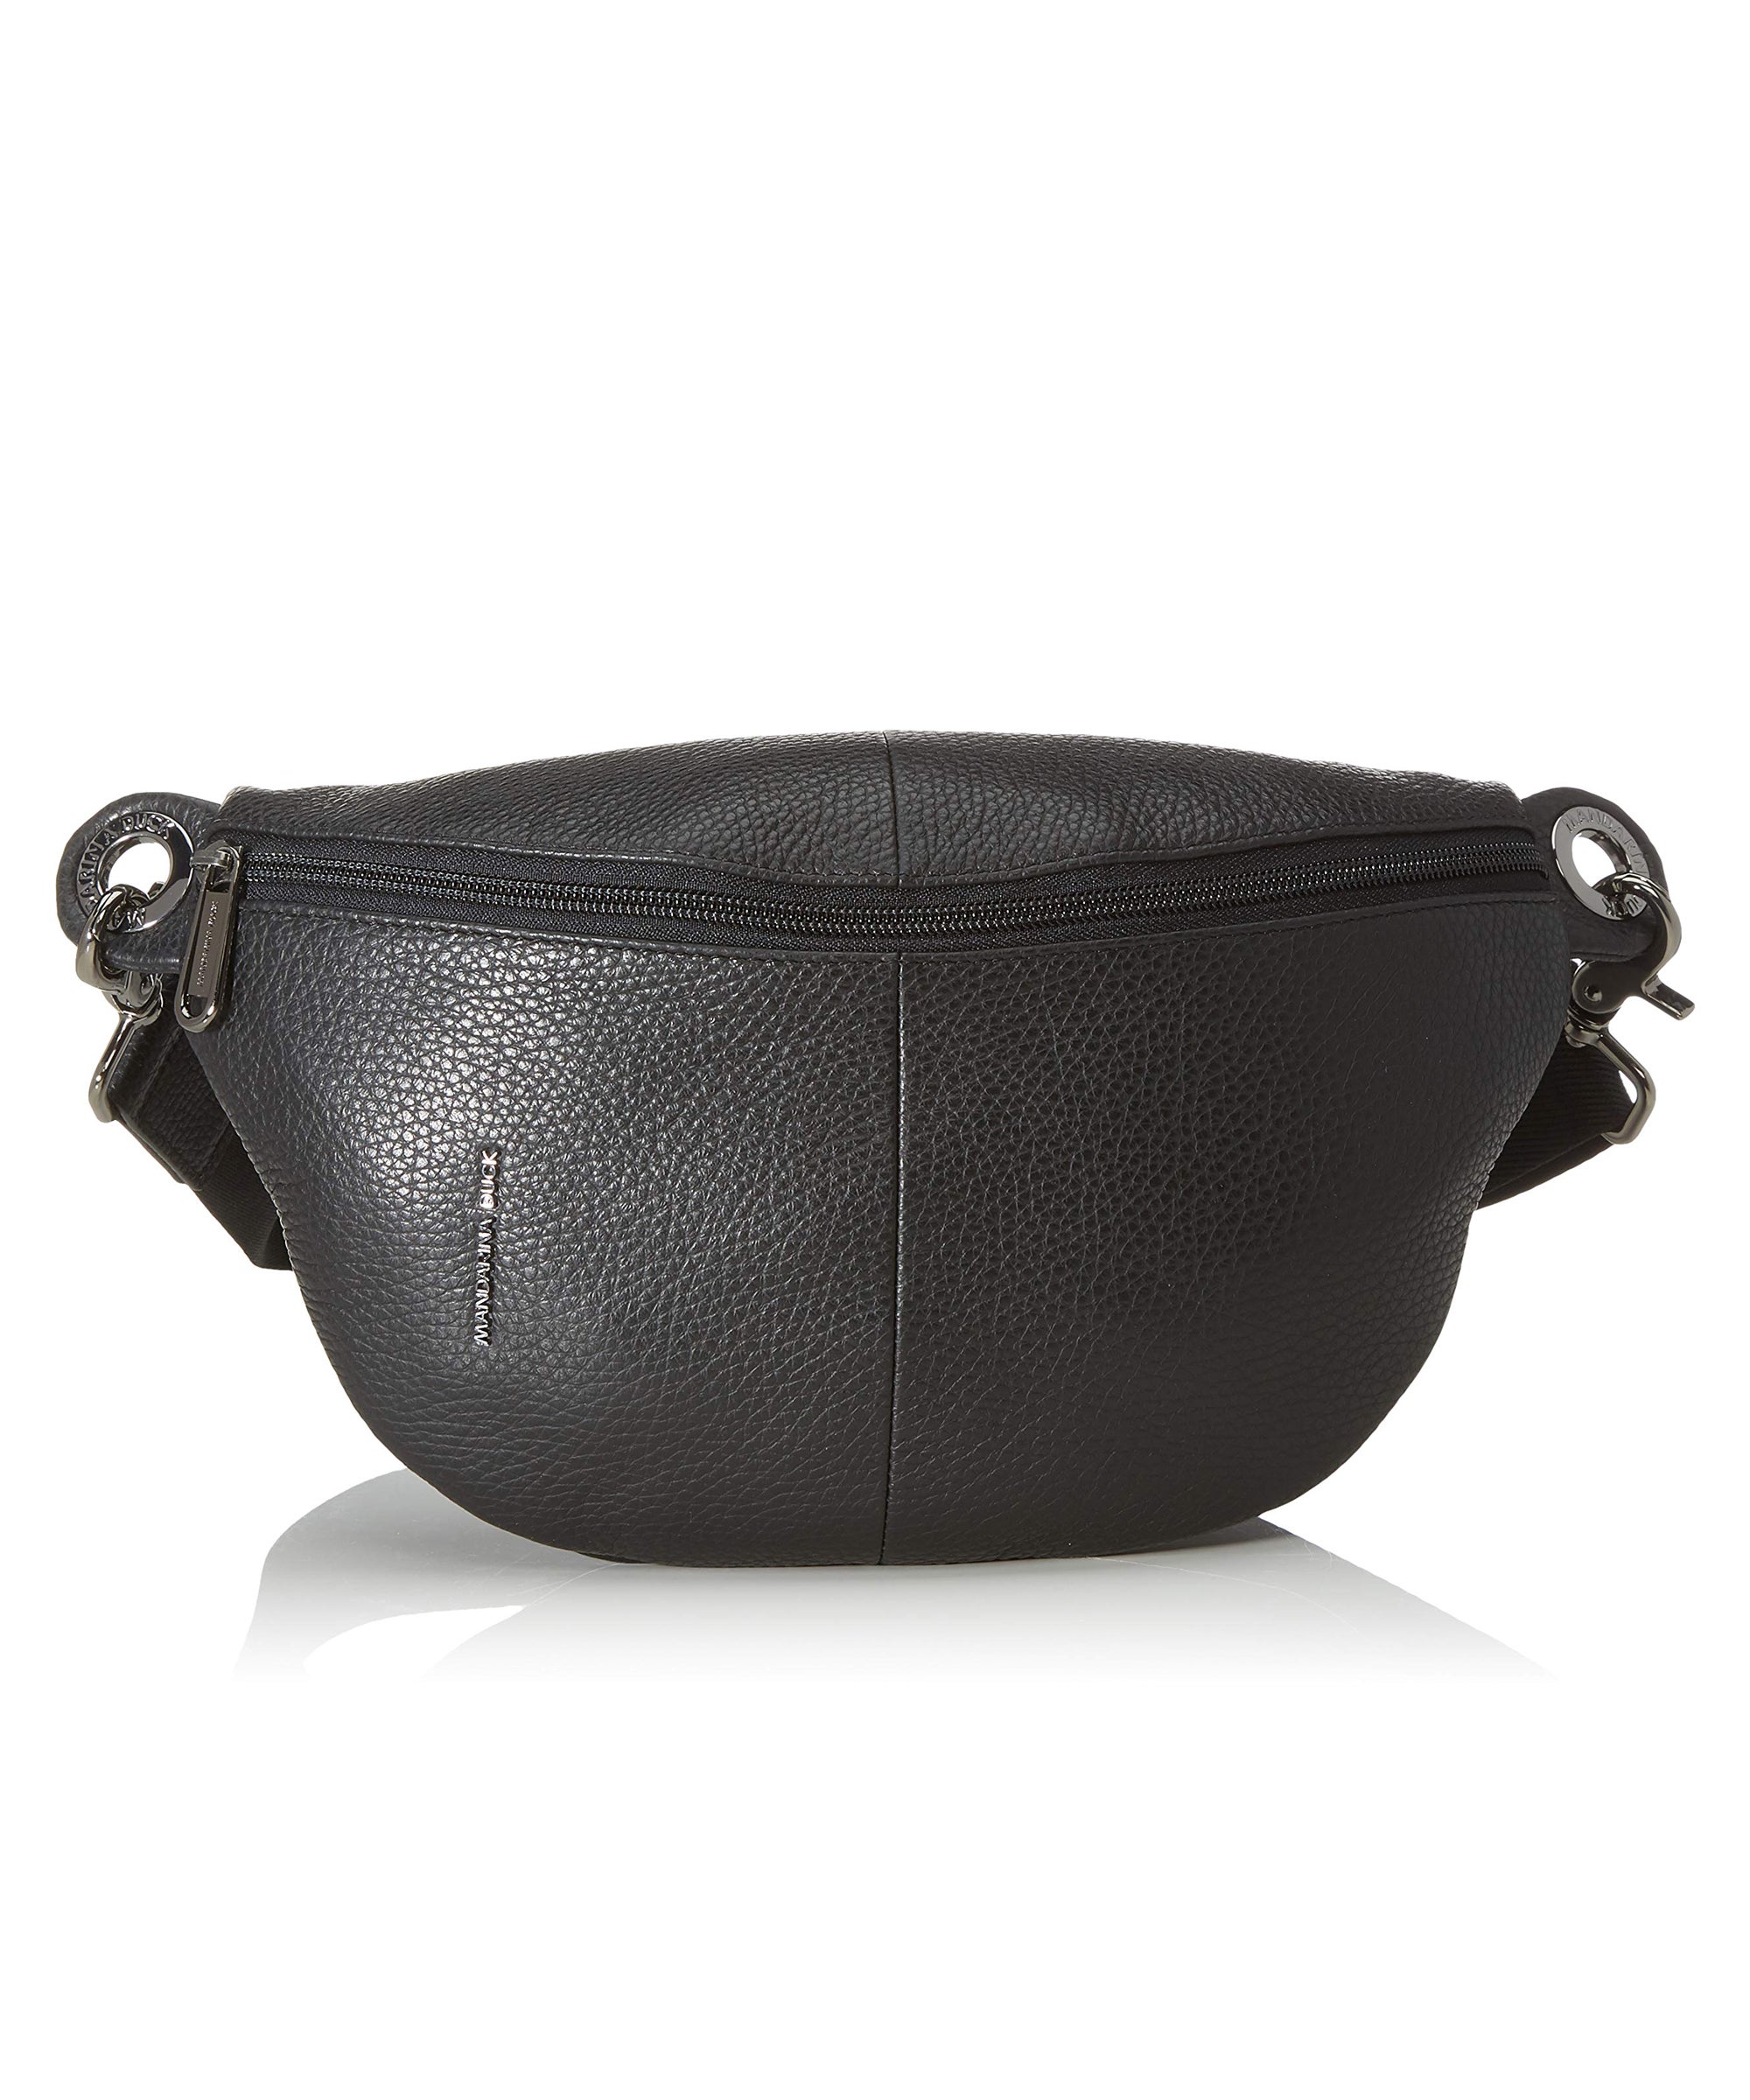 Amazon Fashion + Mandarina Duck Women’s Mellow Leather Bum Bag